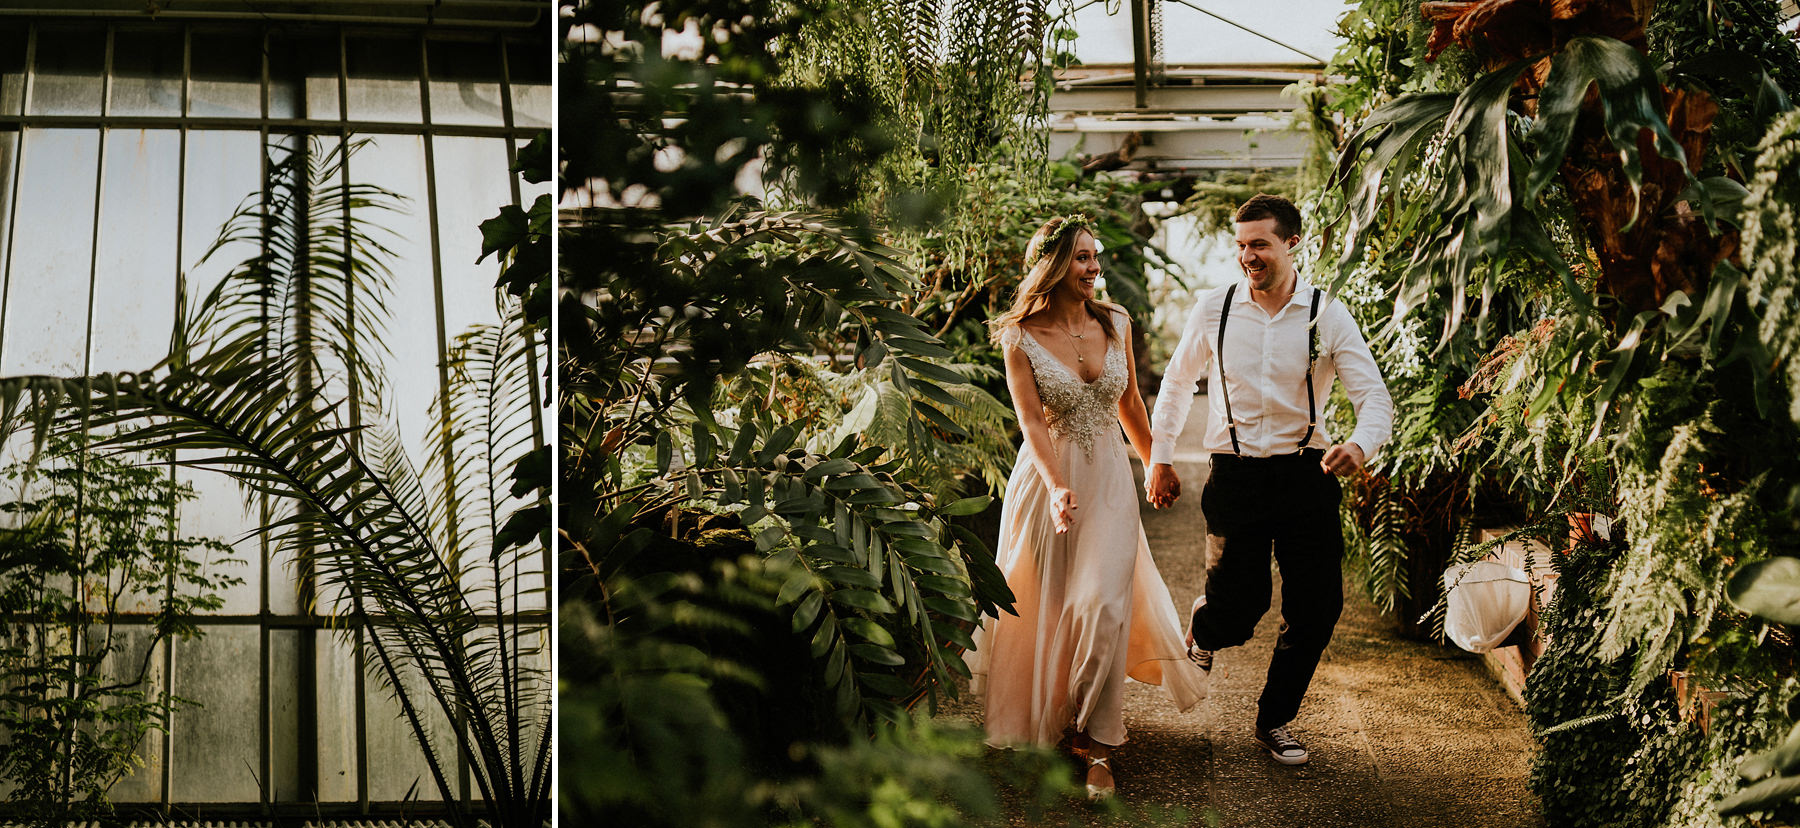 Wedding photo session in the botanical garden - Krakow photographer